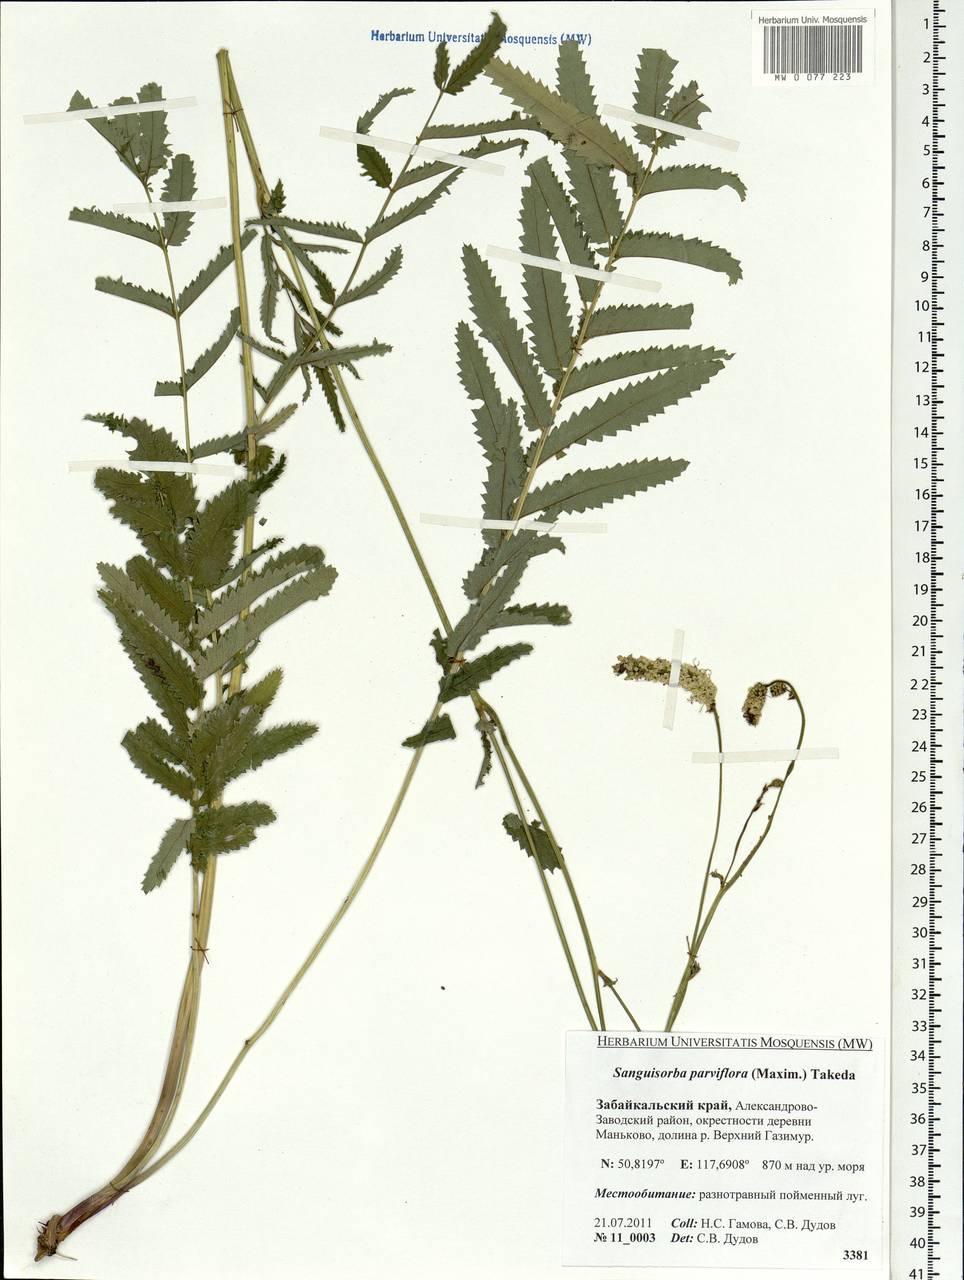 Poterium tenuifolium var. alba (Trautv. & C. A. Mey.), Siberia, Baikal & Transbaikal region (S4) (Russia)